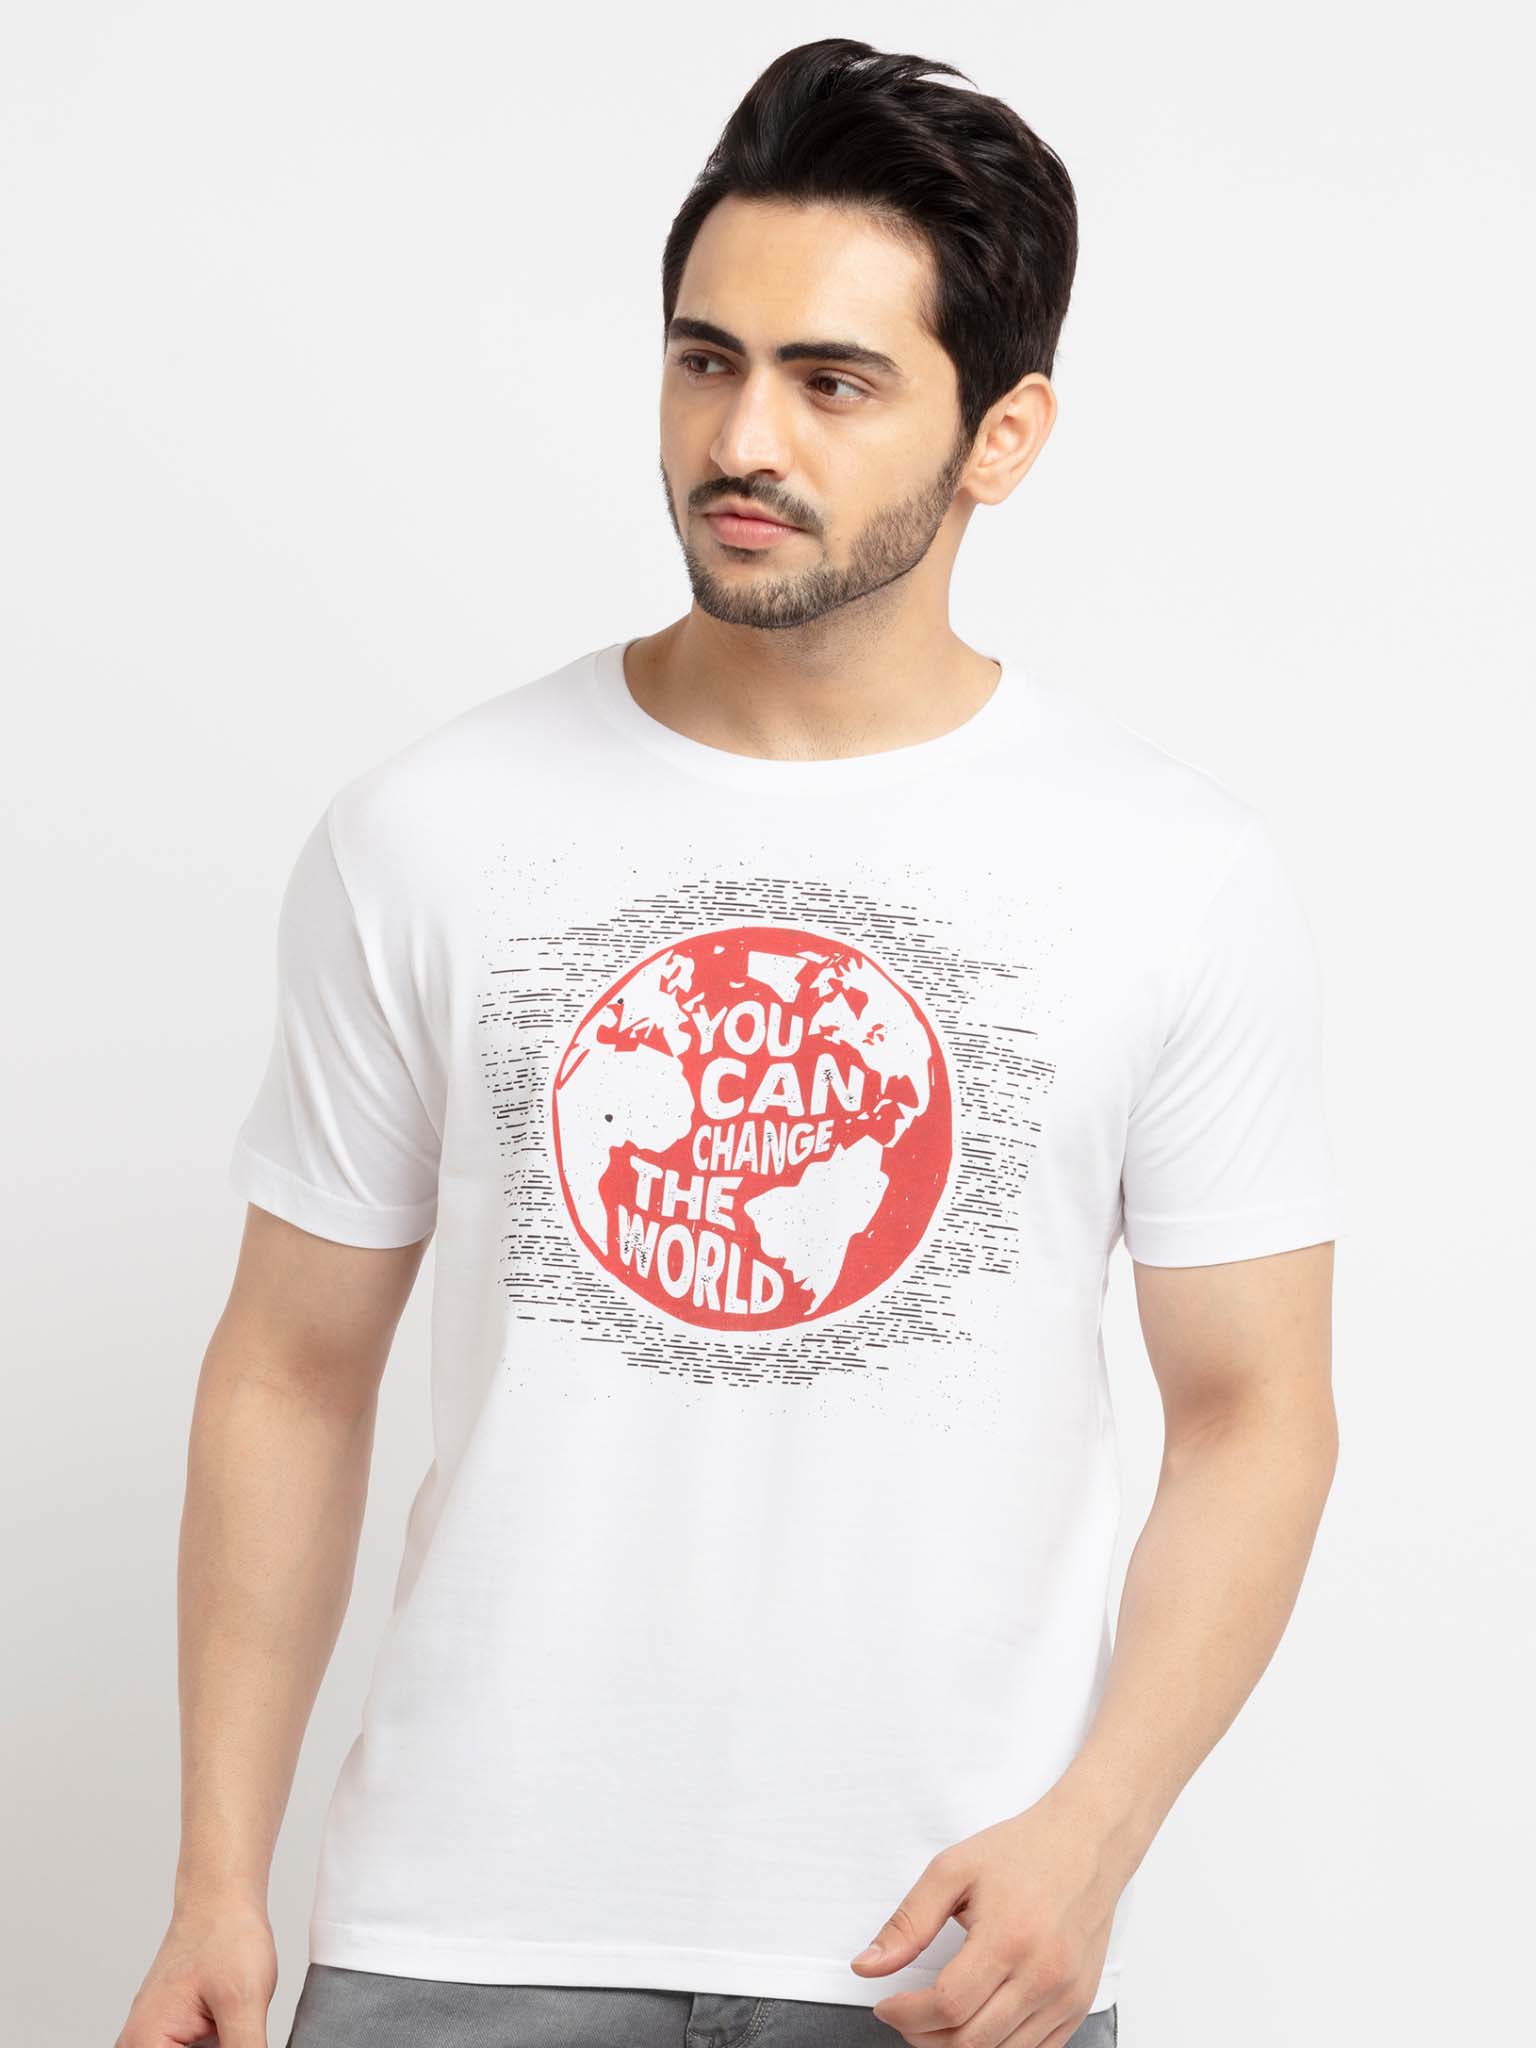 Status Quo |Printed Round Neck T-shirt - S, M, L, XL, XXL